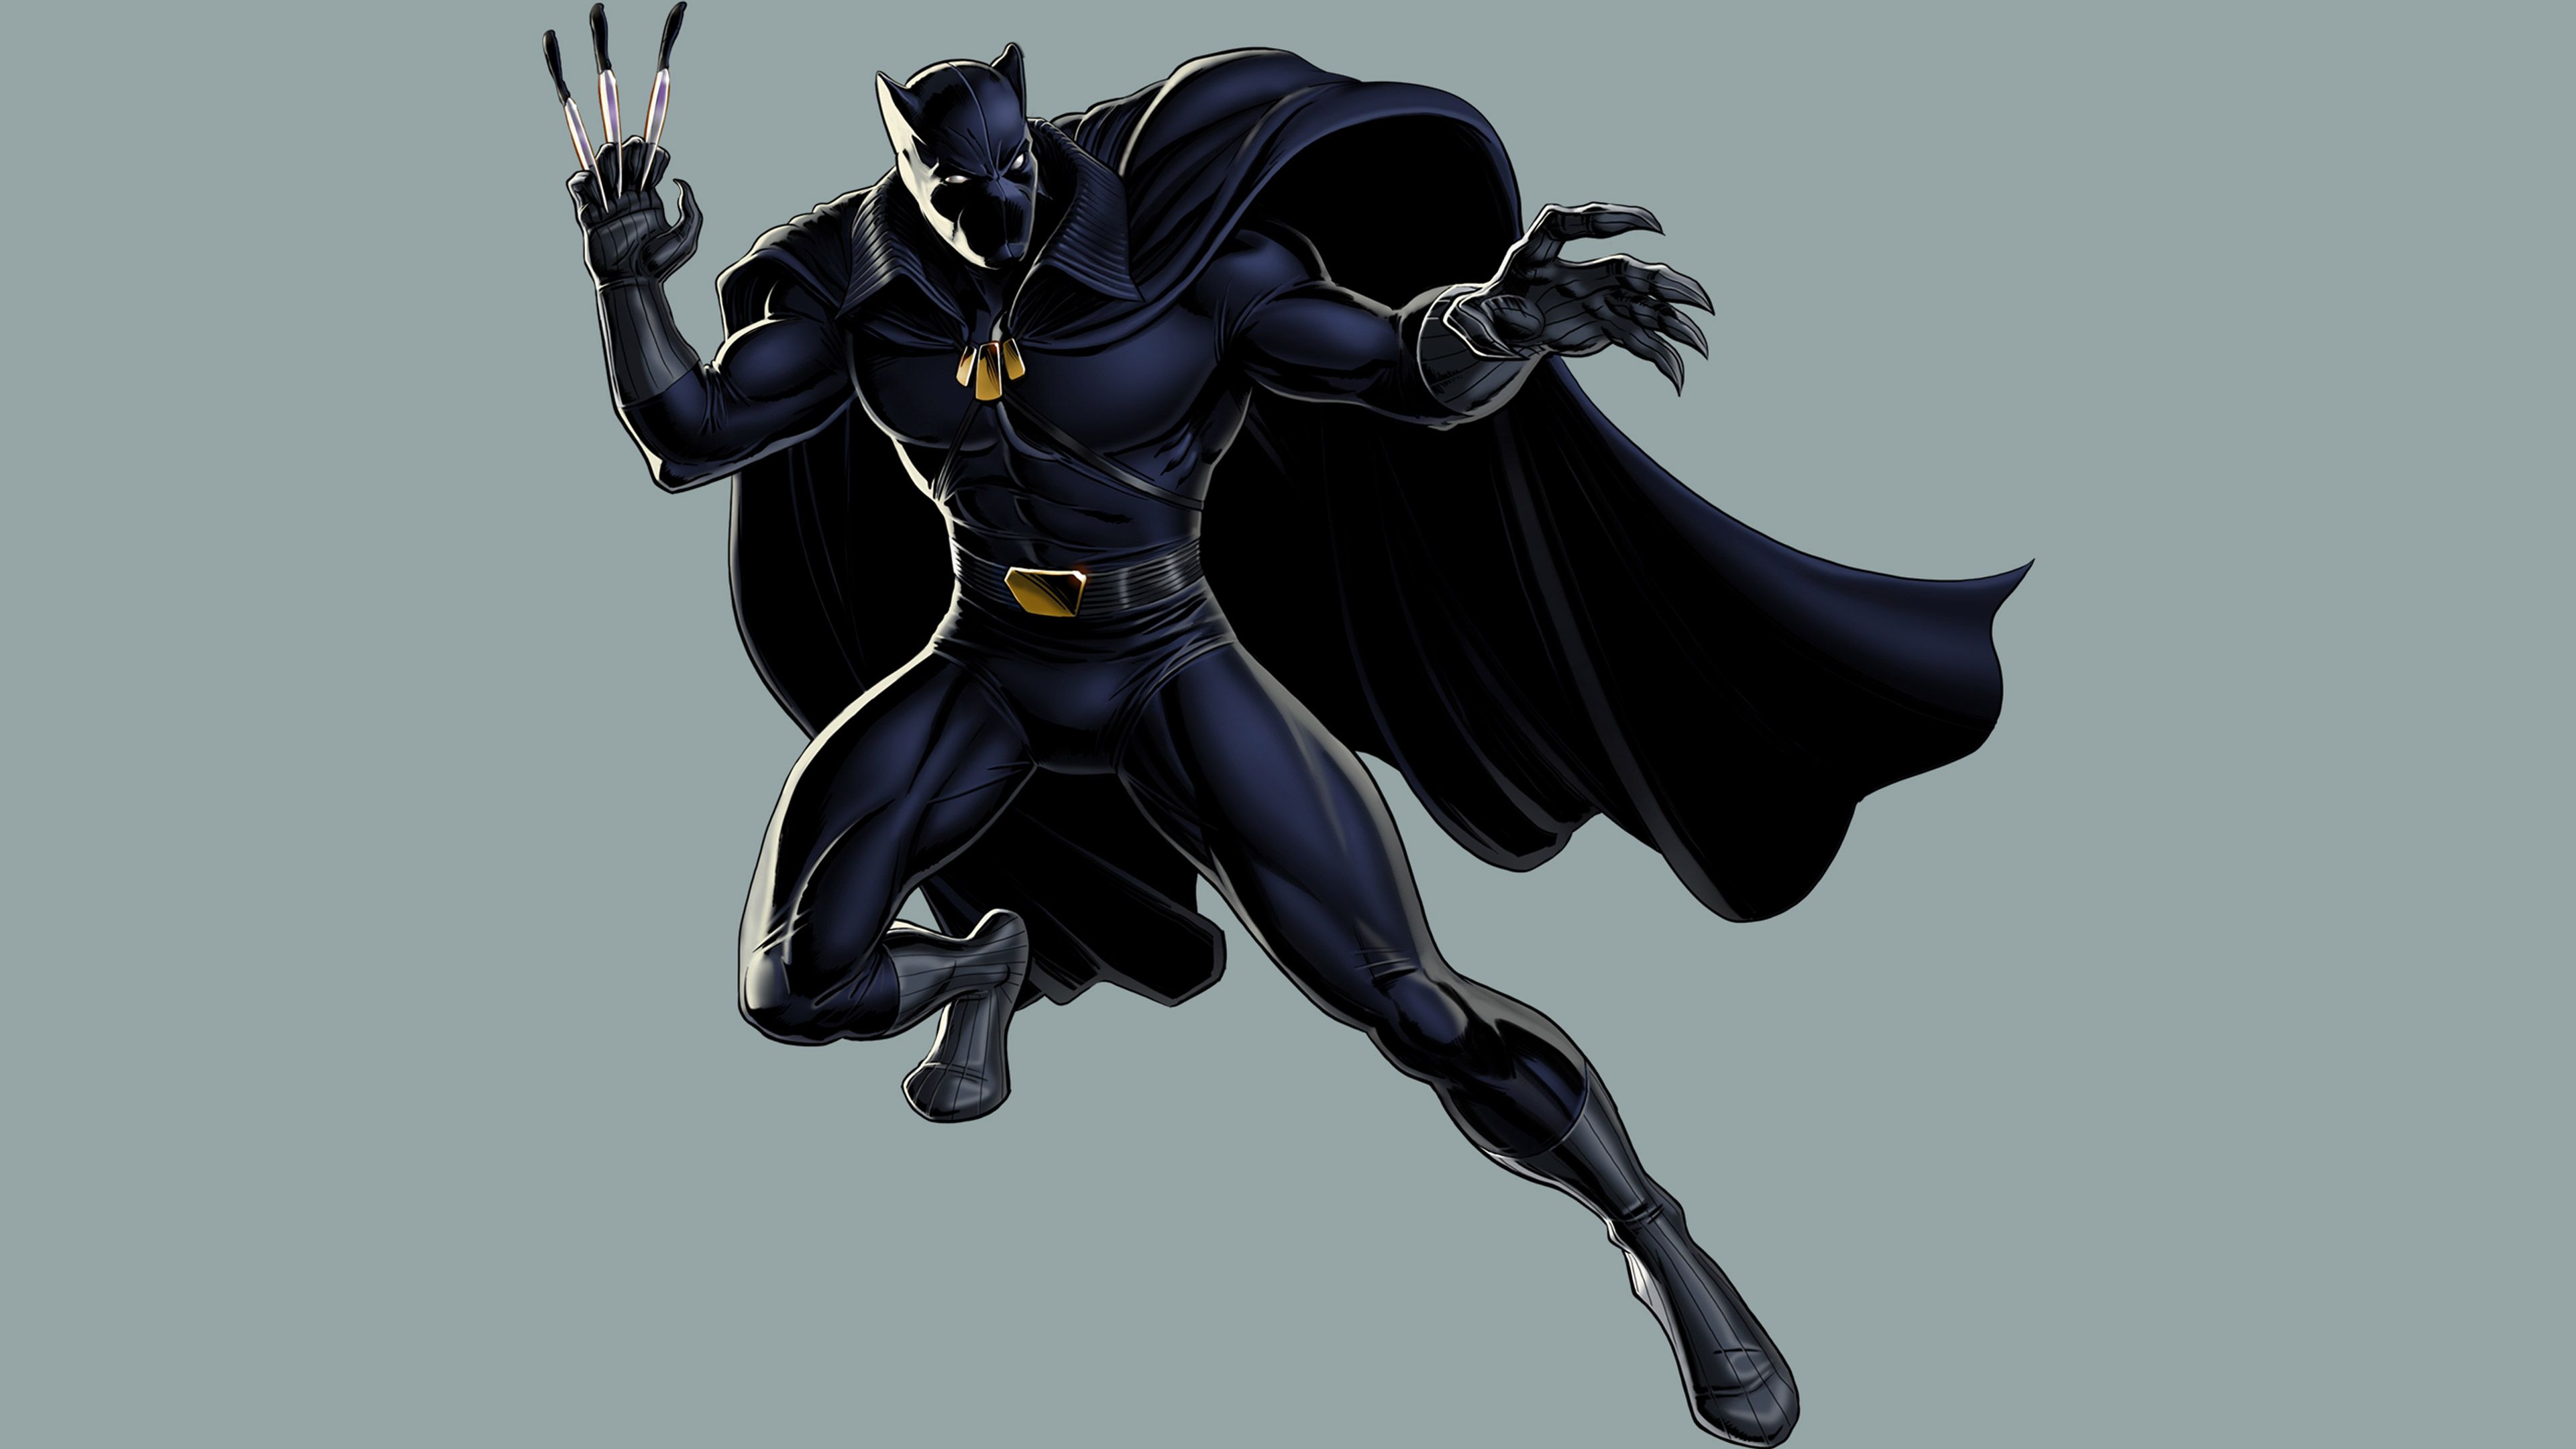 Black Panther Fictional Superhero 2 super heroes wallpaper, digital art wallpaper, black panther wallpaper,. Black panther superhero, Superhero, Black panther